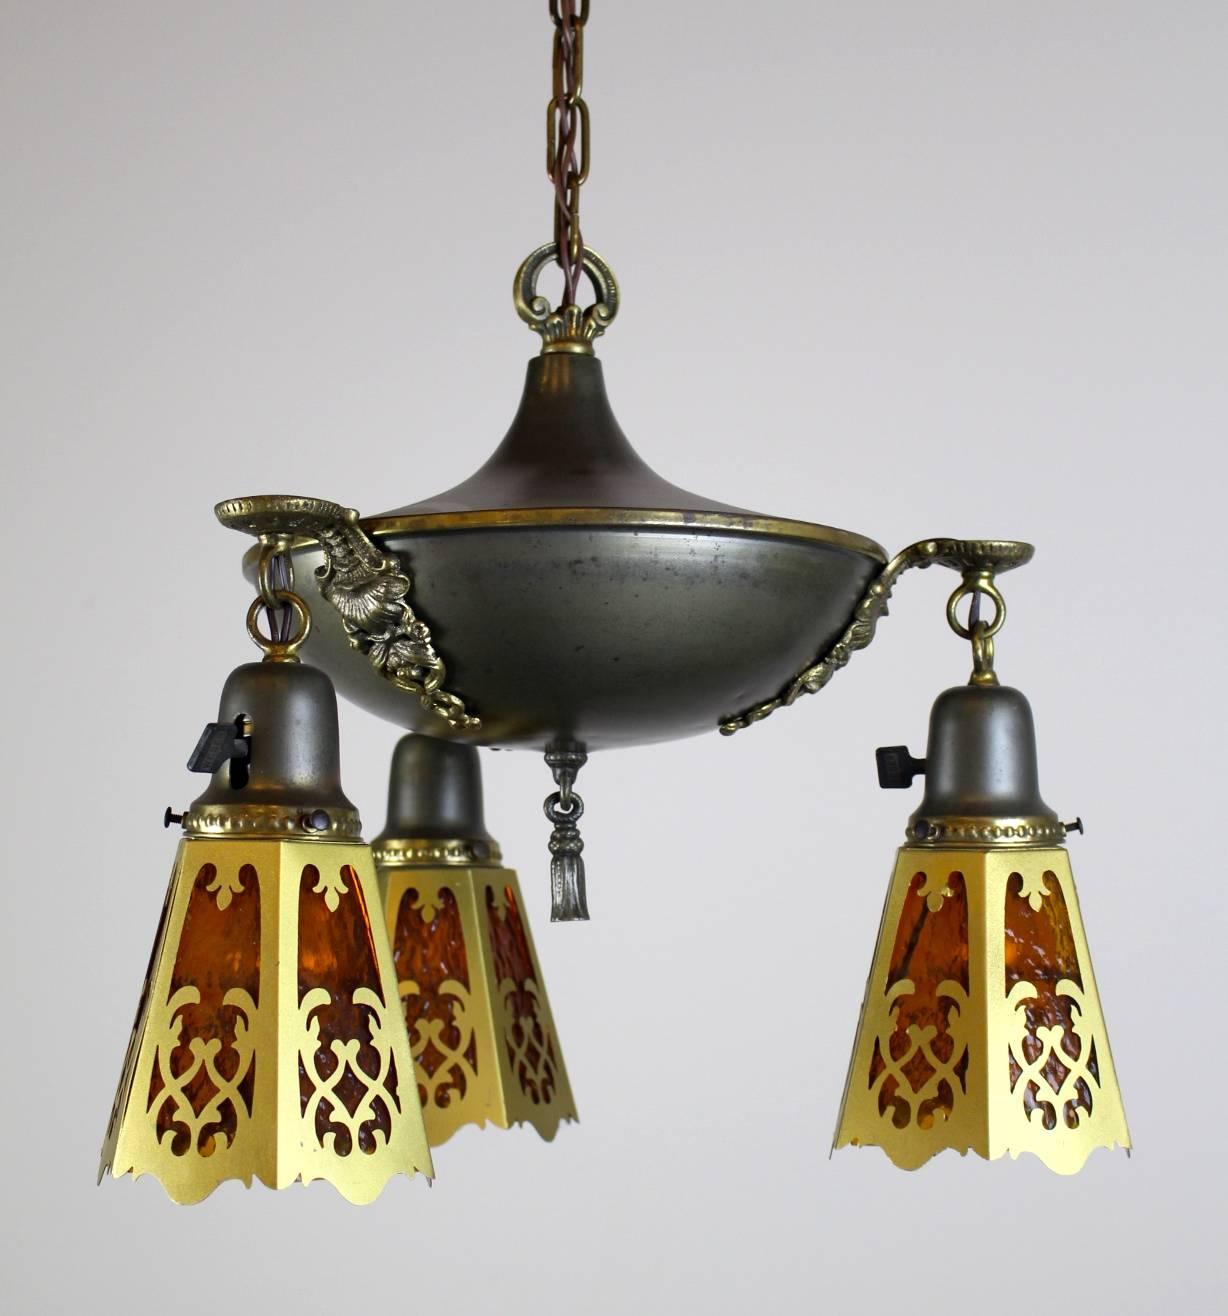 Art Nouveau Inspired Three-Light Pan Fixture For Sale 1